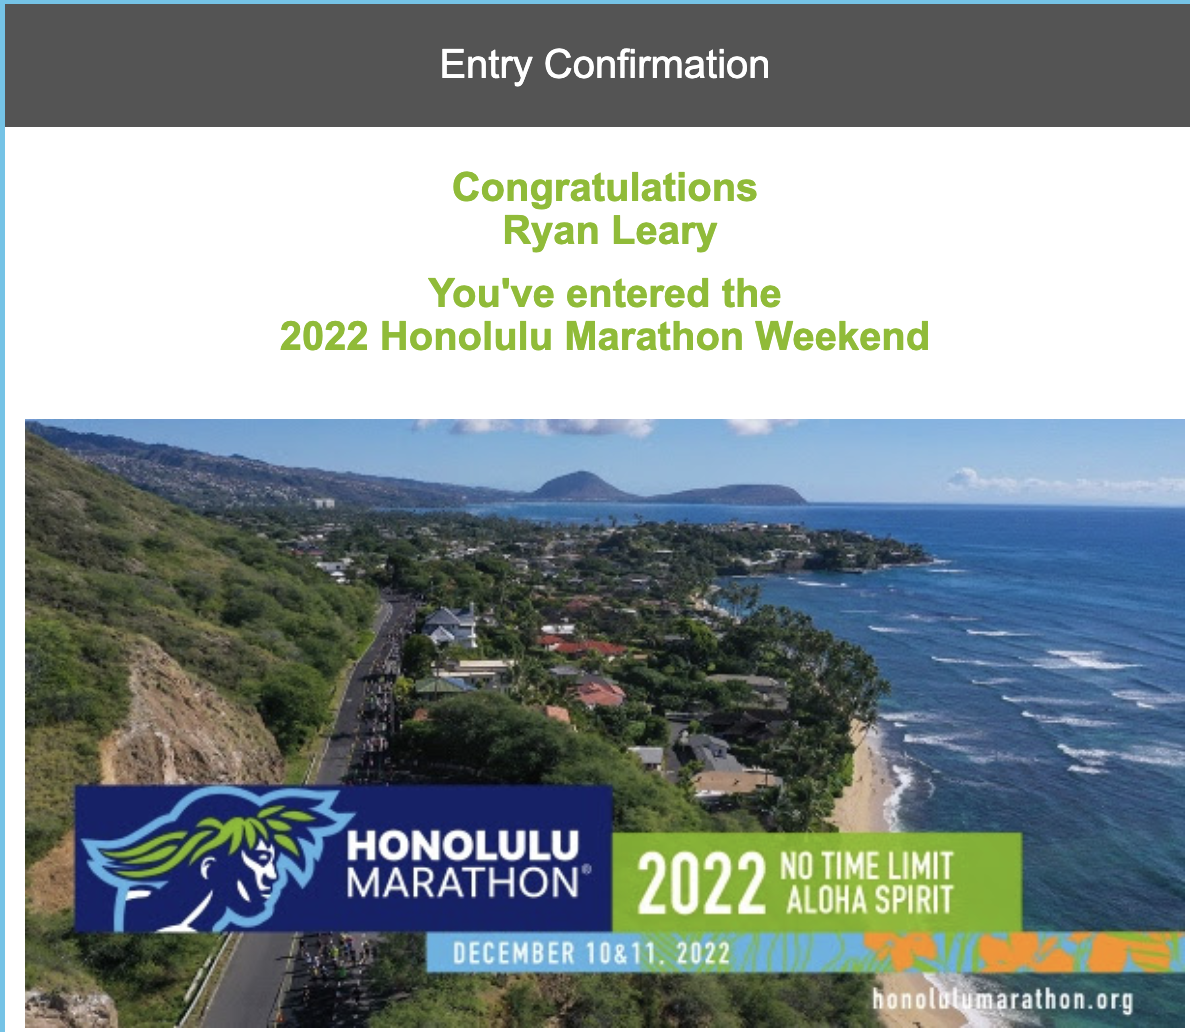 Honolulu Marathon pt. 1 - Why ?